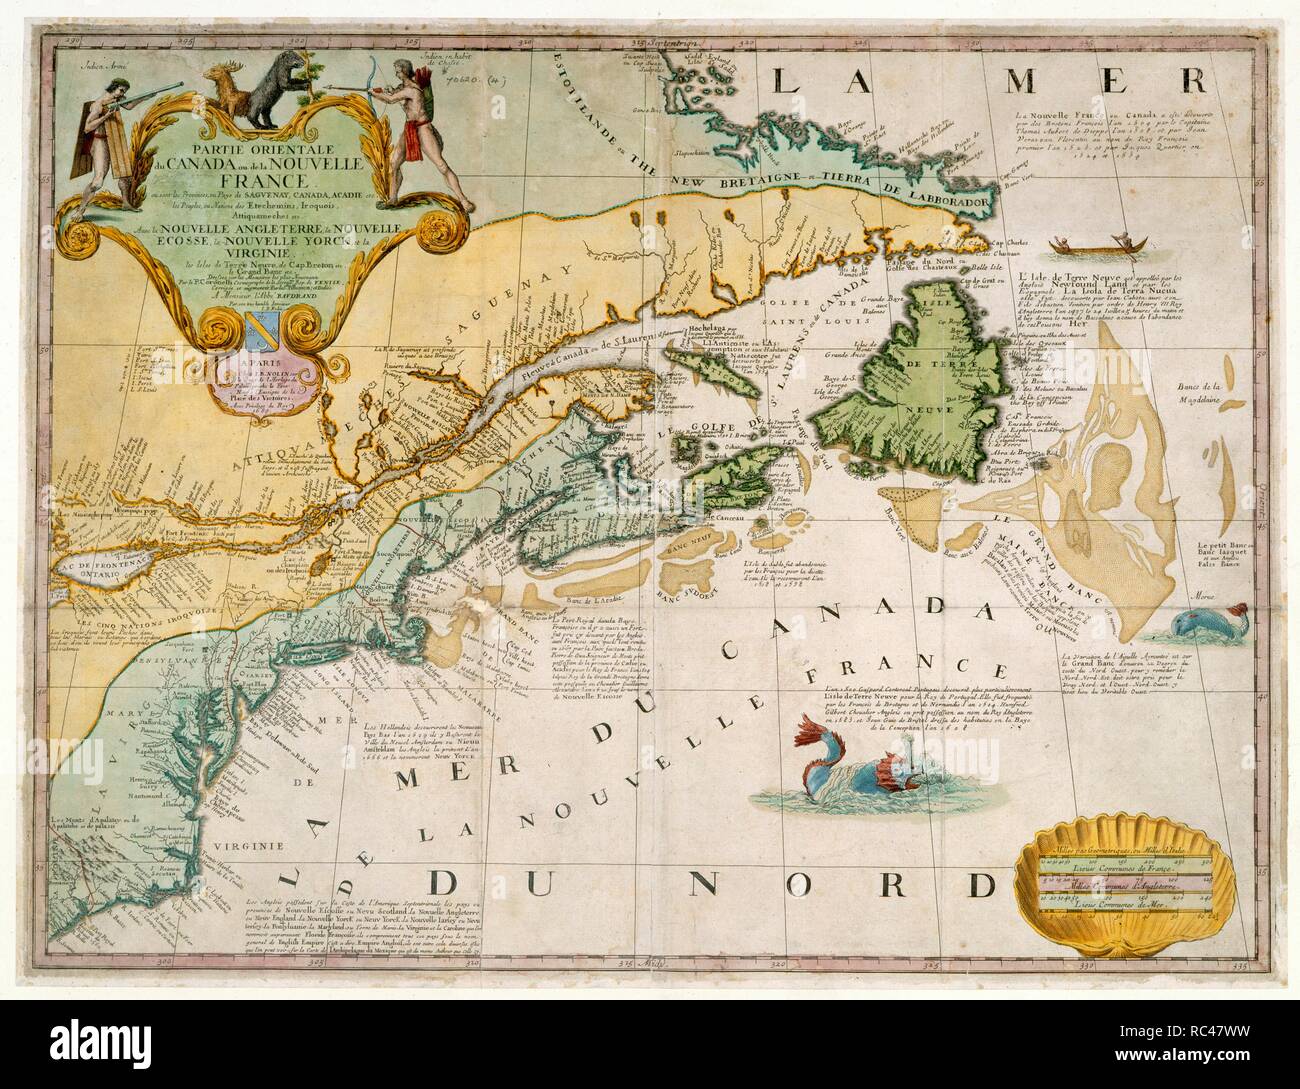 Map of East Coast of Canada, published in 1745. . Partie occidentale de la Nouvelle France ou Canada Par M. Bellin. Paris, Nuremberg, & Londres. Published in 1745. Source: Maps*70620 4. Language: French. Stock Photo